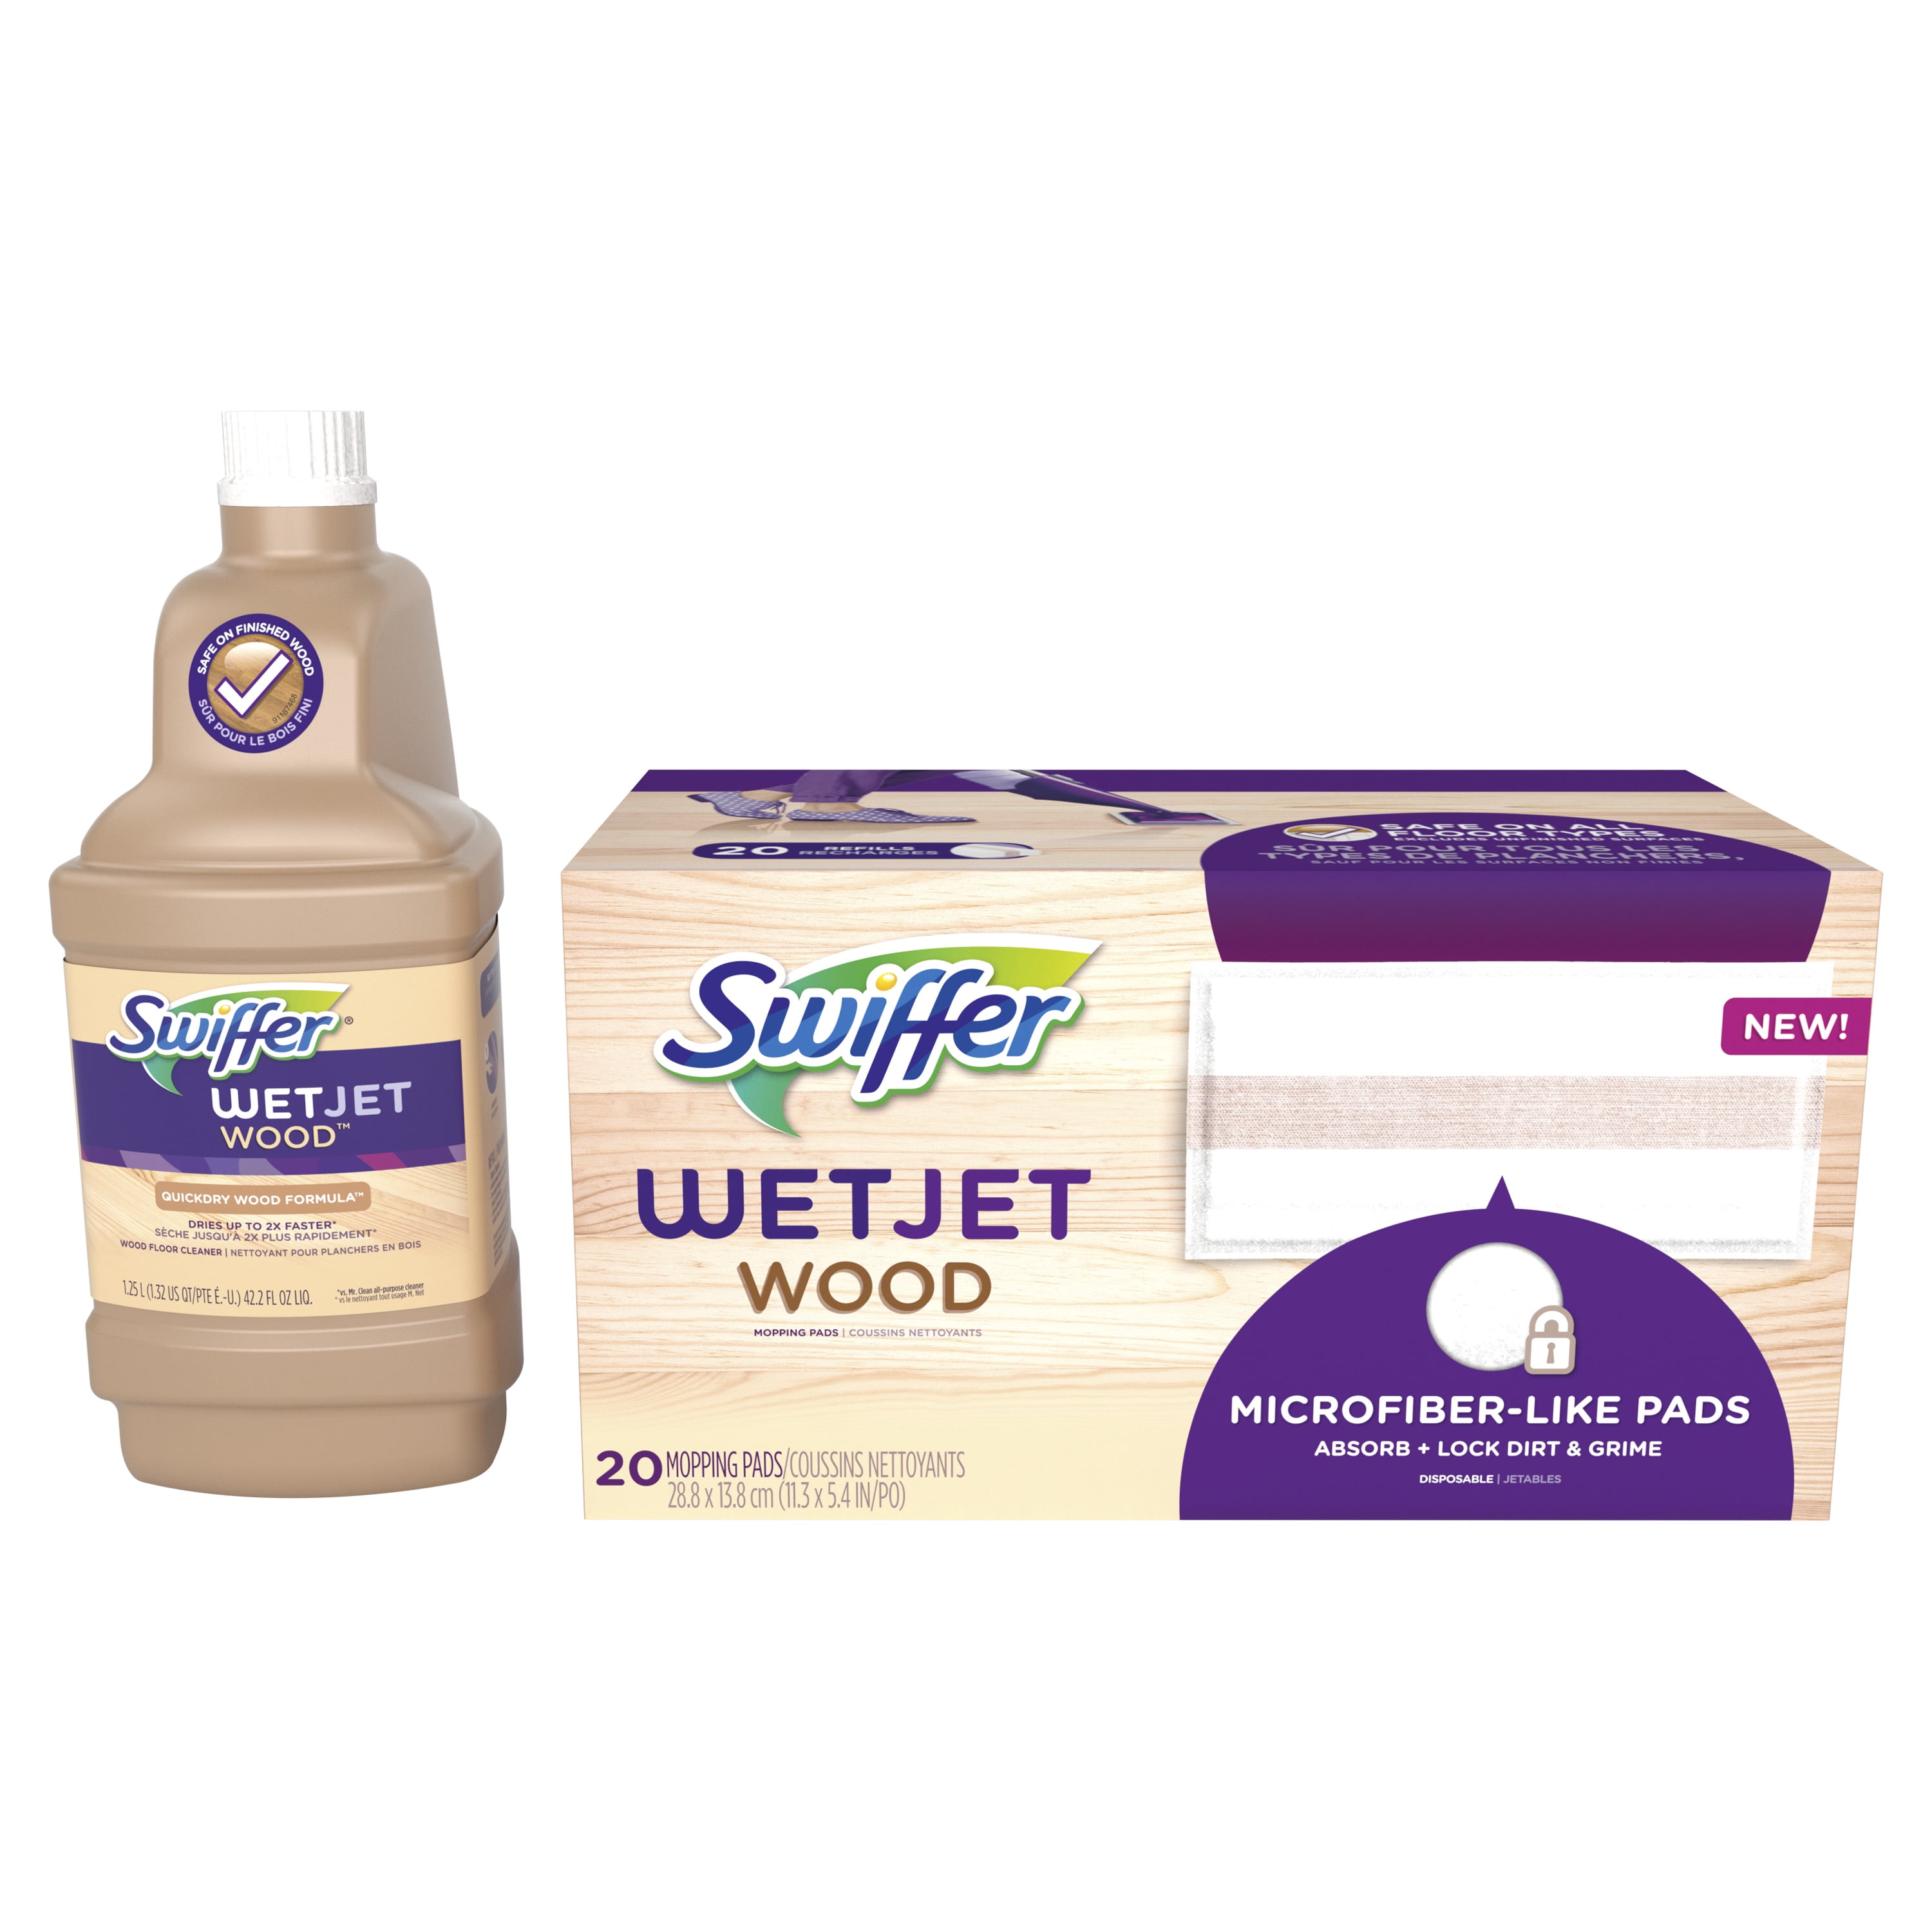 Swiffer WetJet vs. Swiffer WetJet Wood: What's the Difference?